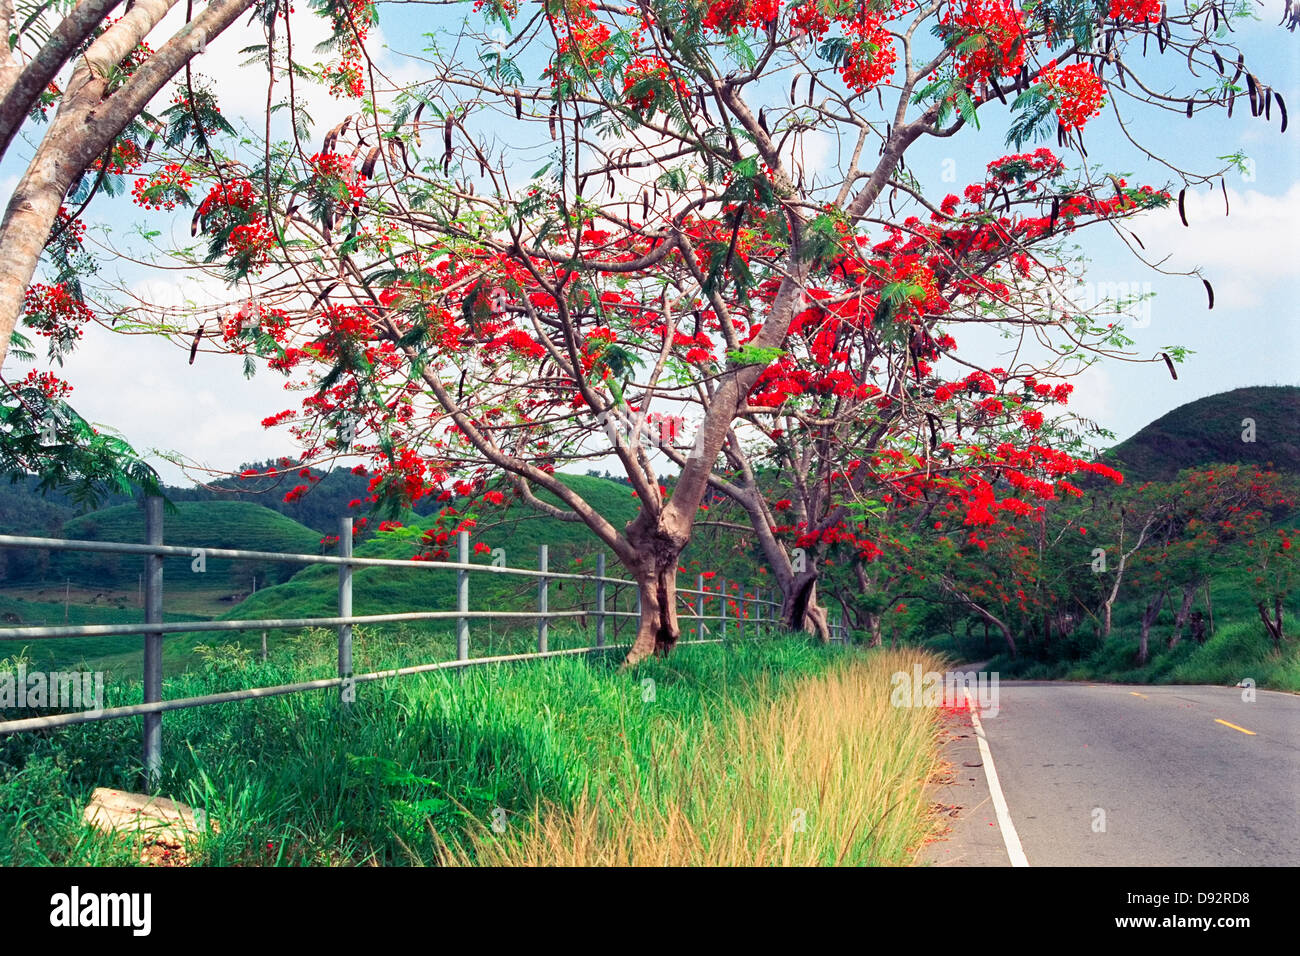 Blooming Flamboyan alberi lungo una strada di campagna, Puerto Rico Foto Stock